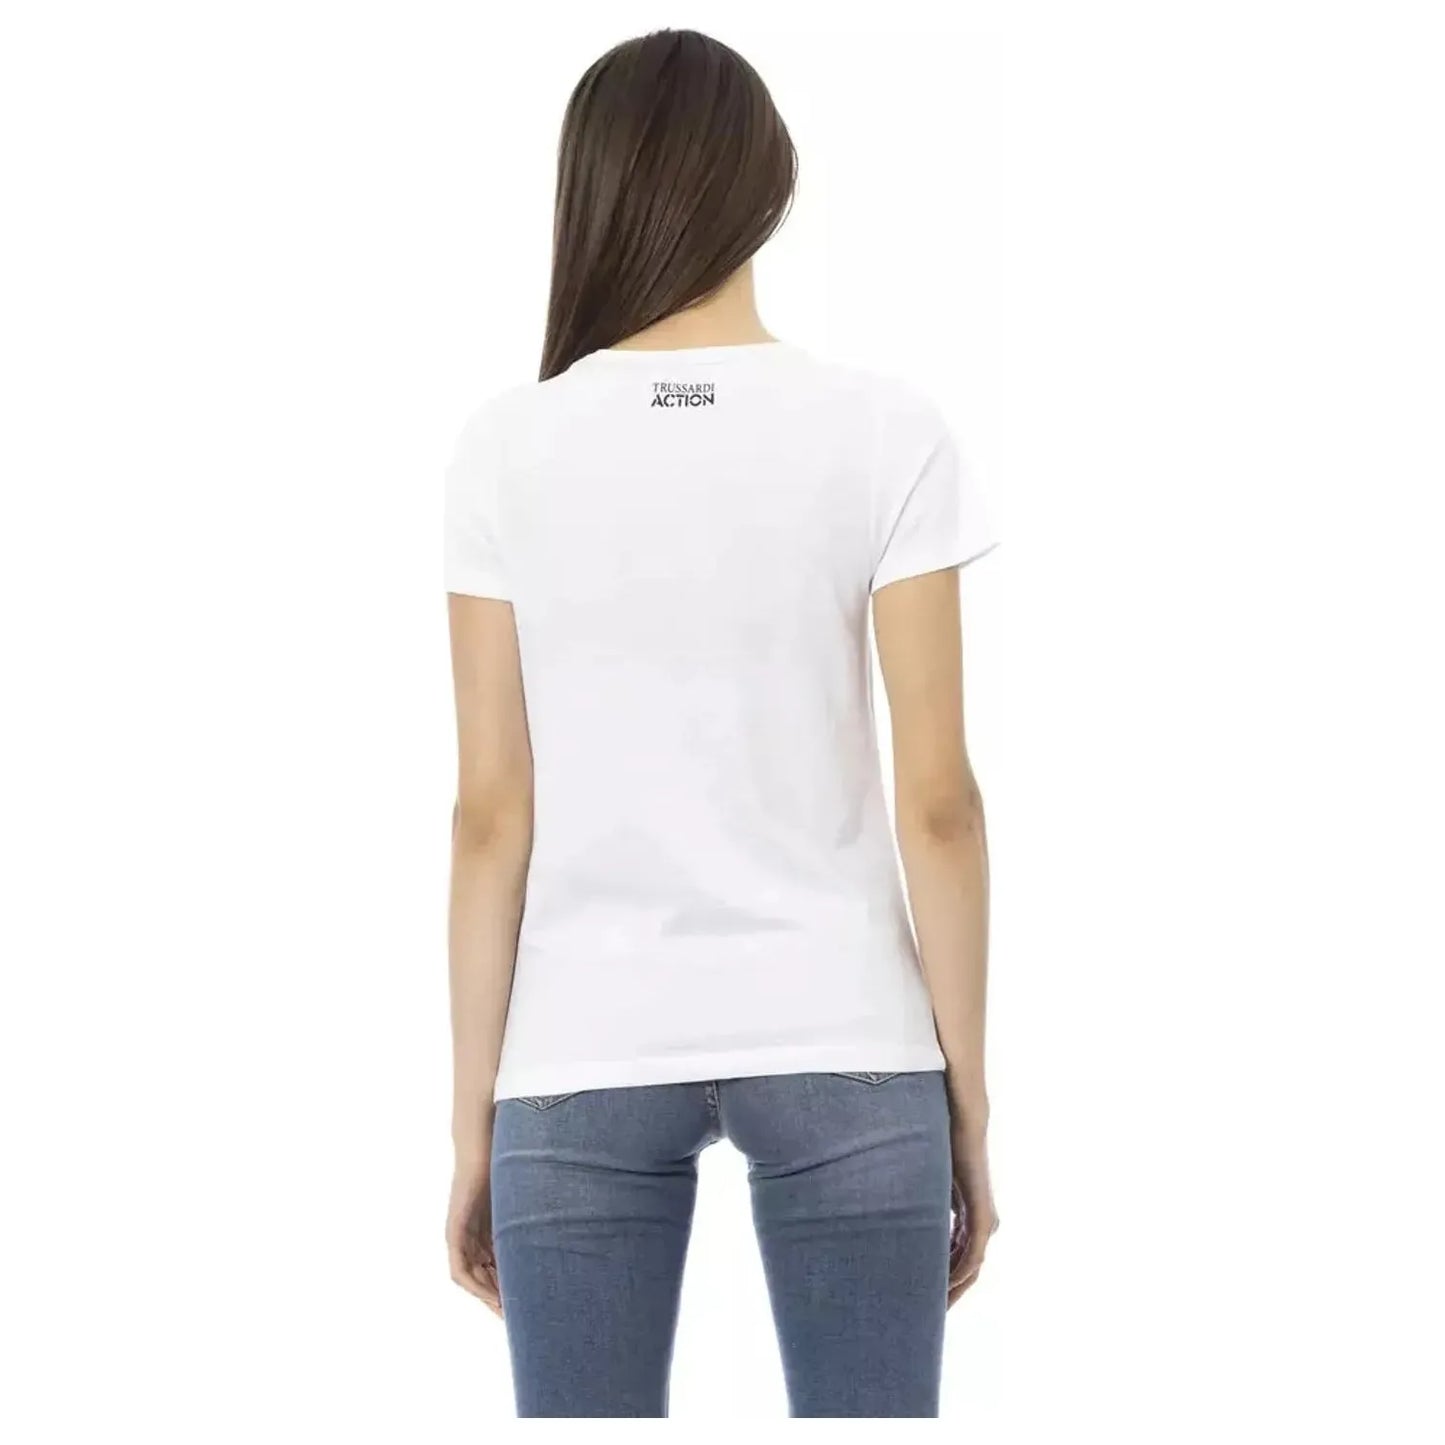 Trussardi Action Elegant Short Sleeve Round Neck Tee white-cotton-tops-t-shirt-89